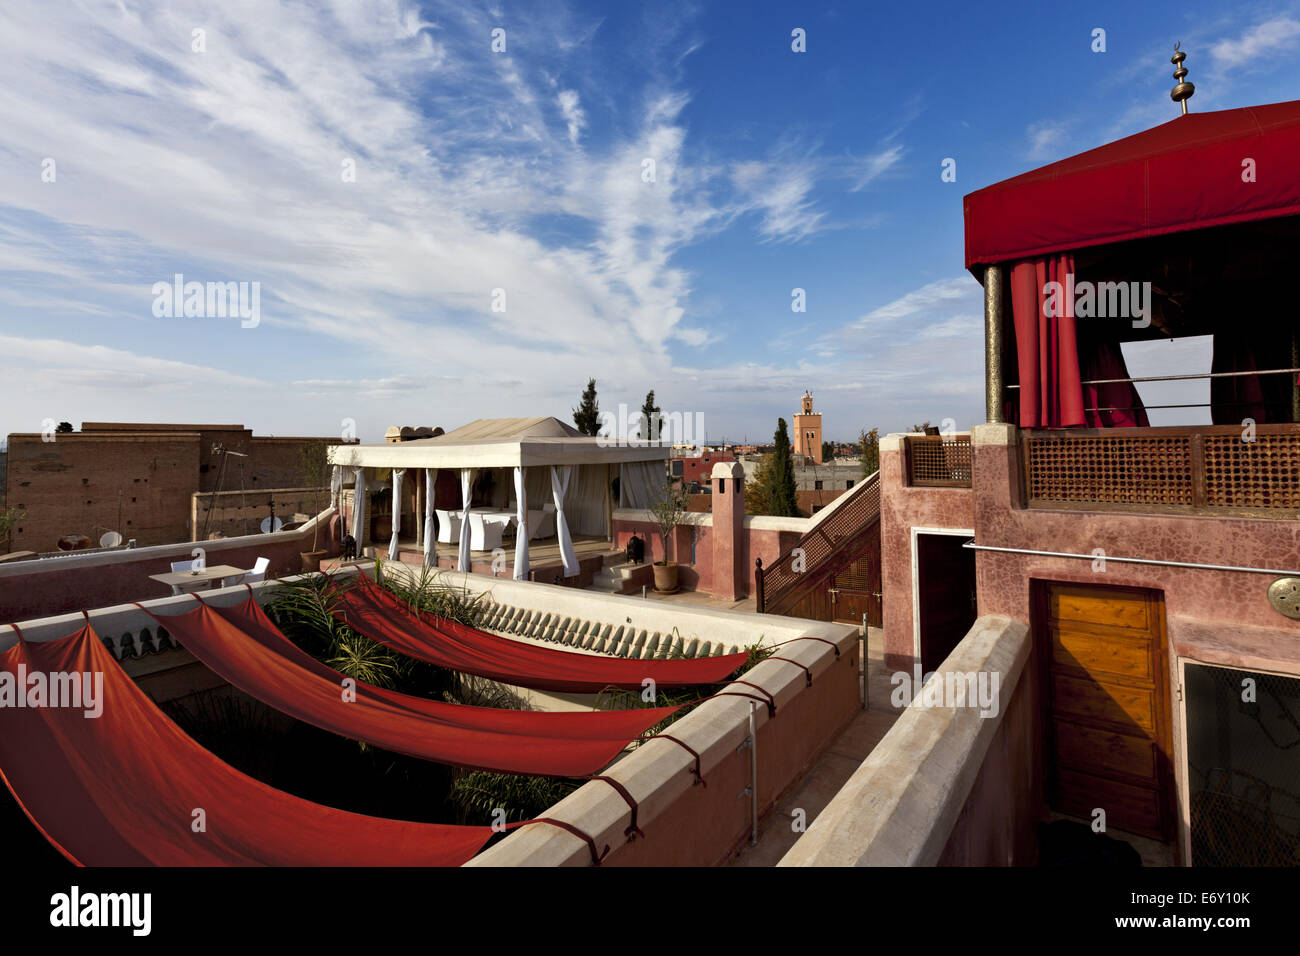 Flying carpet pavilion on the roof, Riad Anayela, Marrakech, Morocco Stock Photo